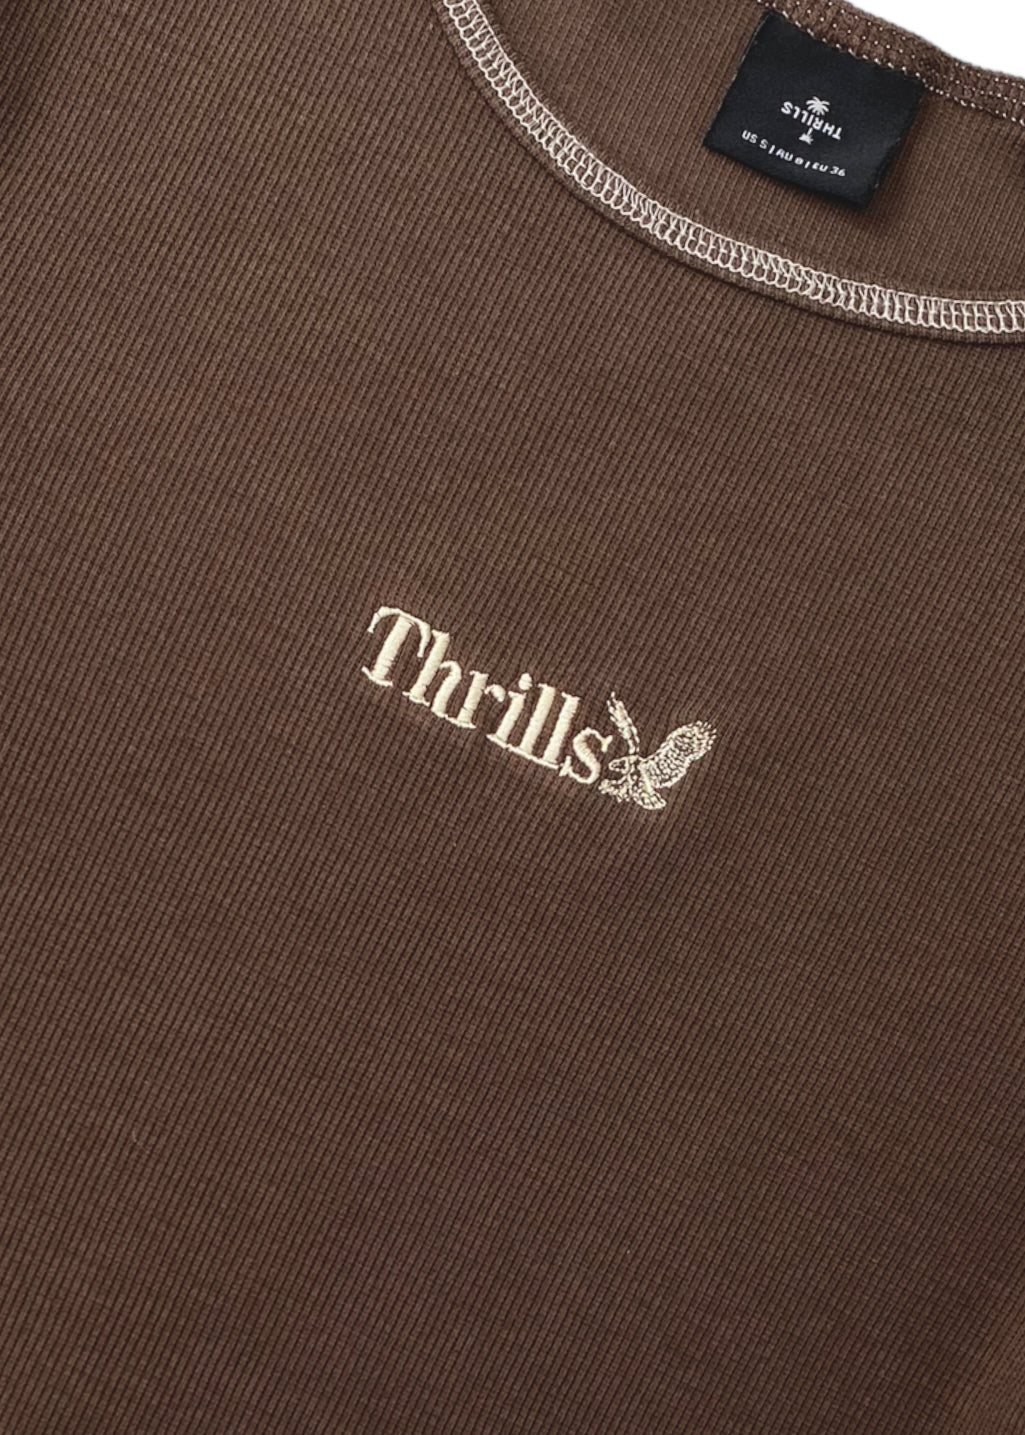 THRILLS - Workwear Embro Crop Baby Tee - Umber - Hardpressed Print Studio Inc.